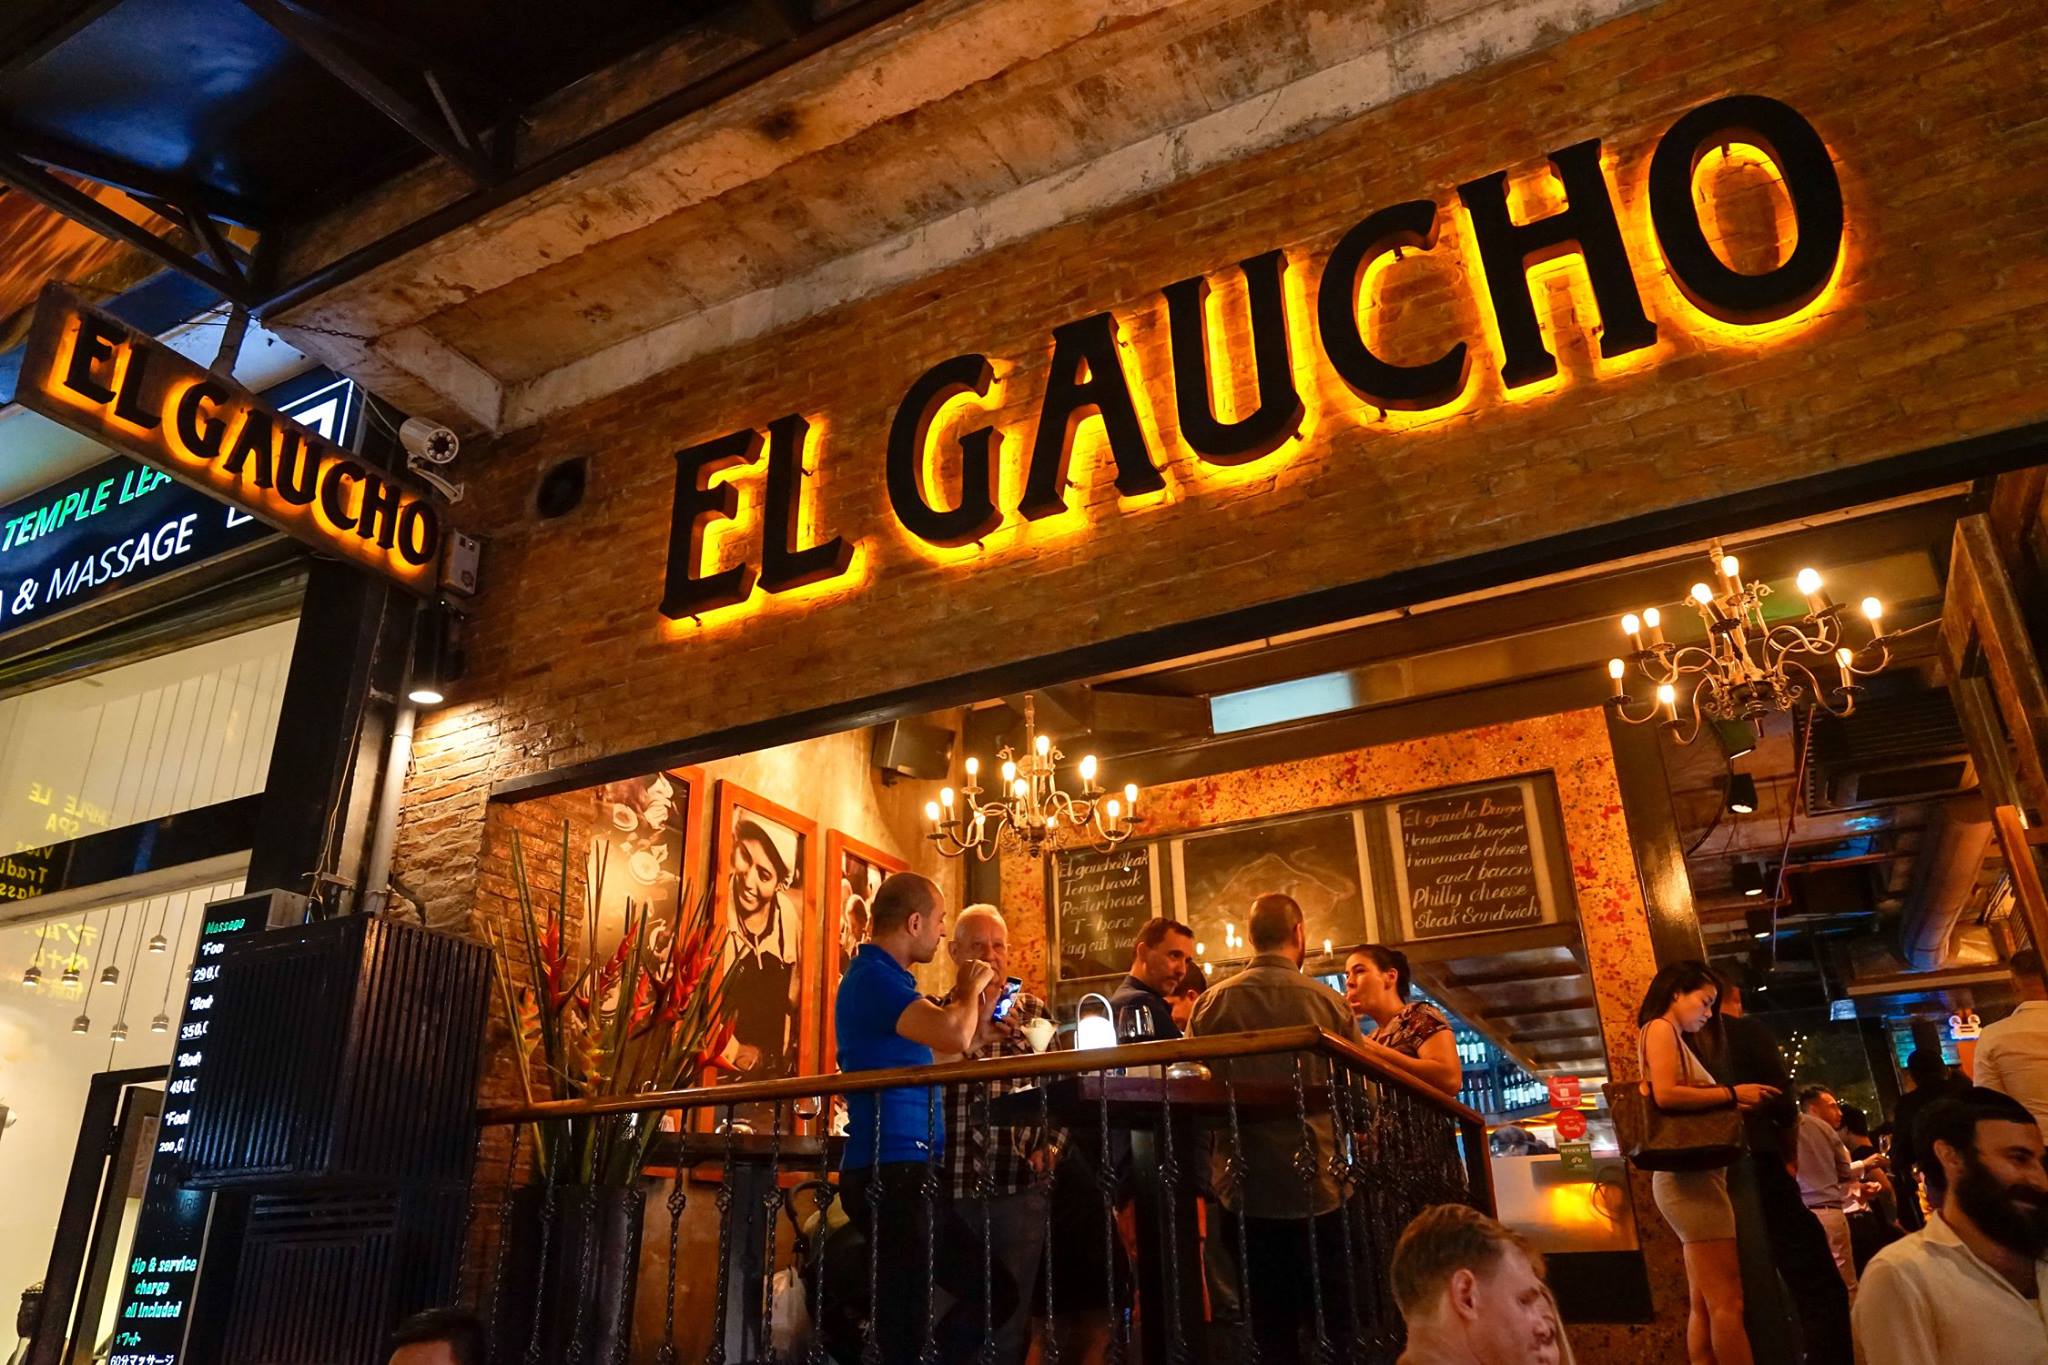 El Gaucho Argentinian Steakhouse Vietnam